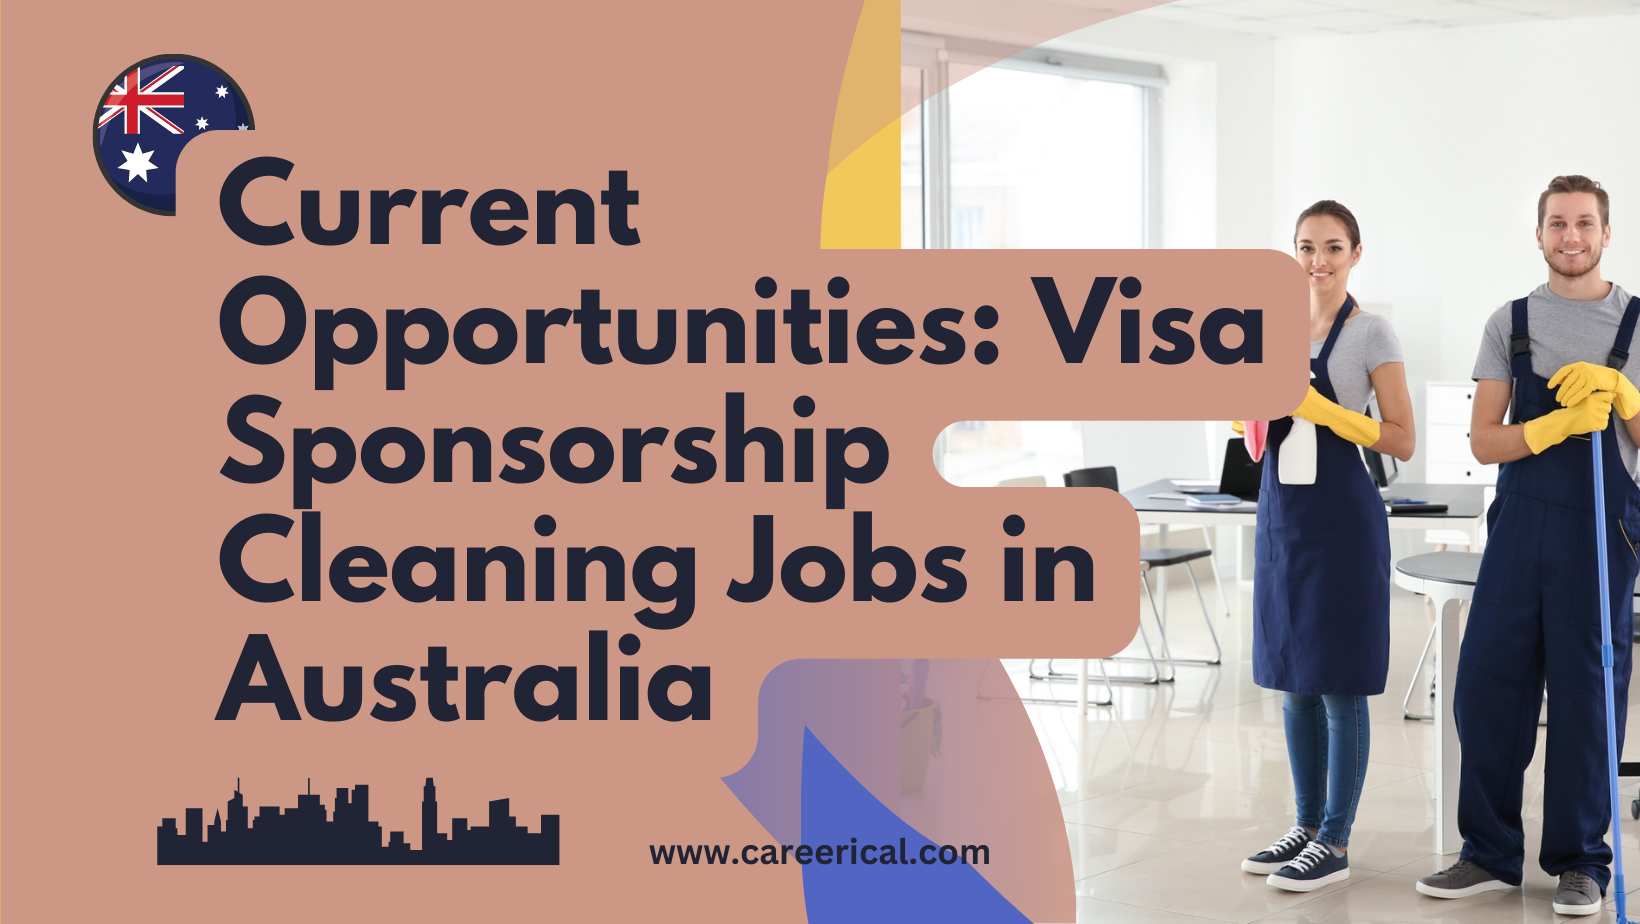 Current Opportunities Visa Sponsorship Cleaning Jobs in Australia